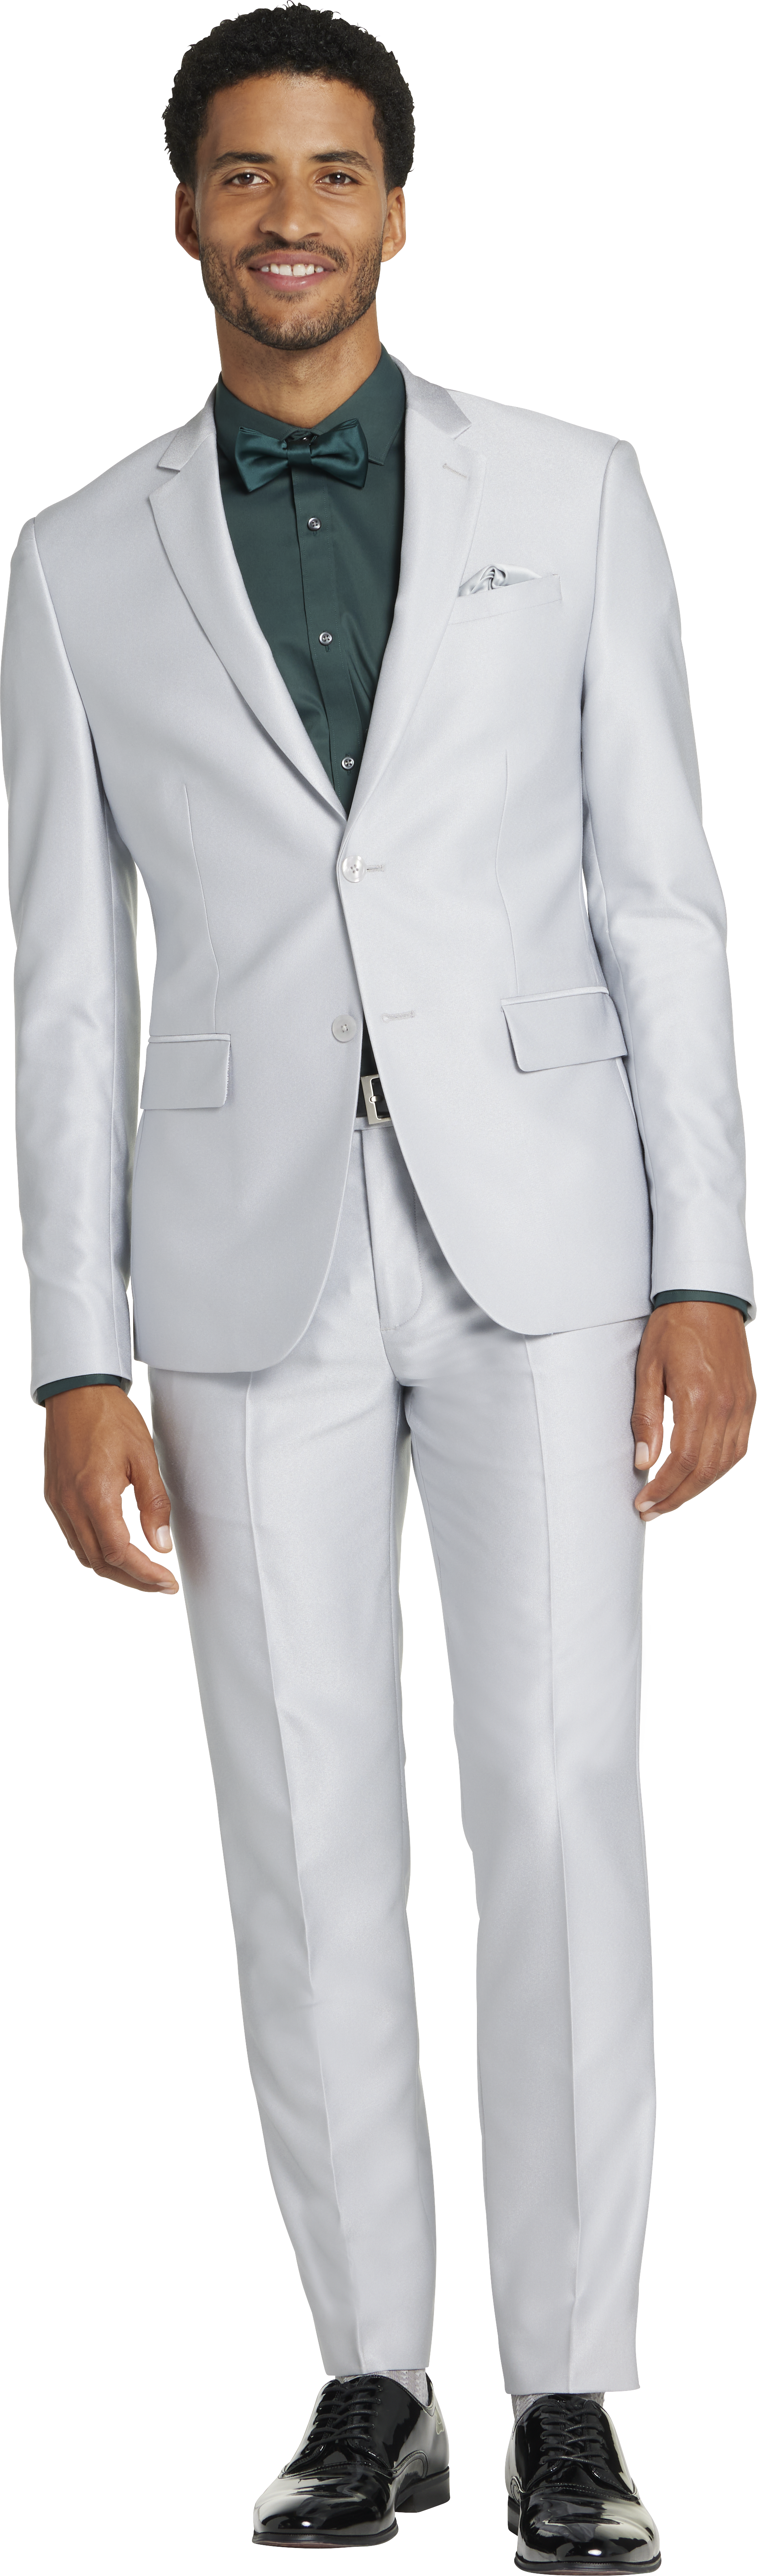 Modern Fit Notch Lapel Shiny Suit Separates Jacket